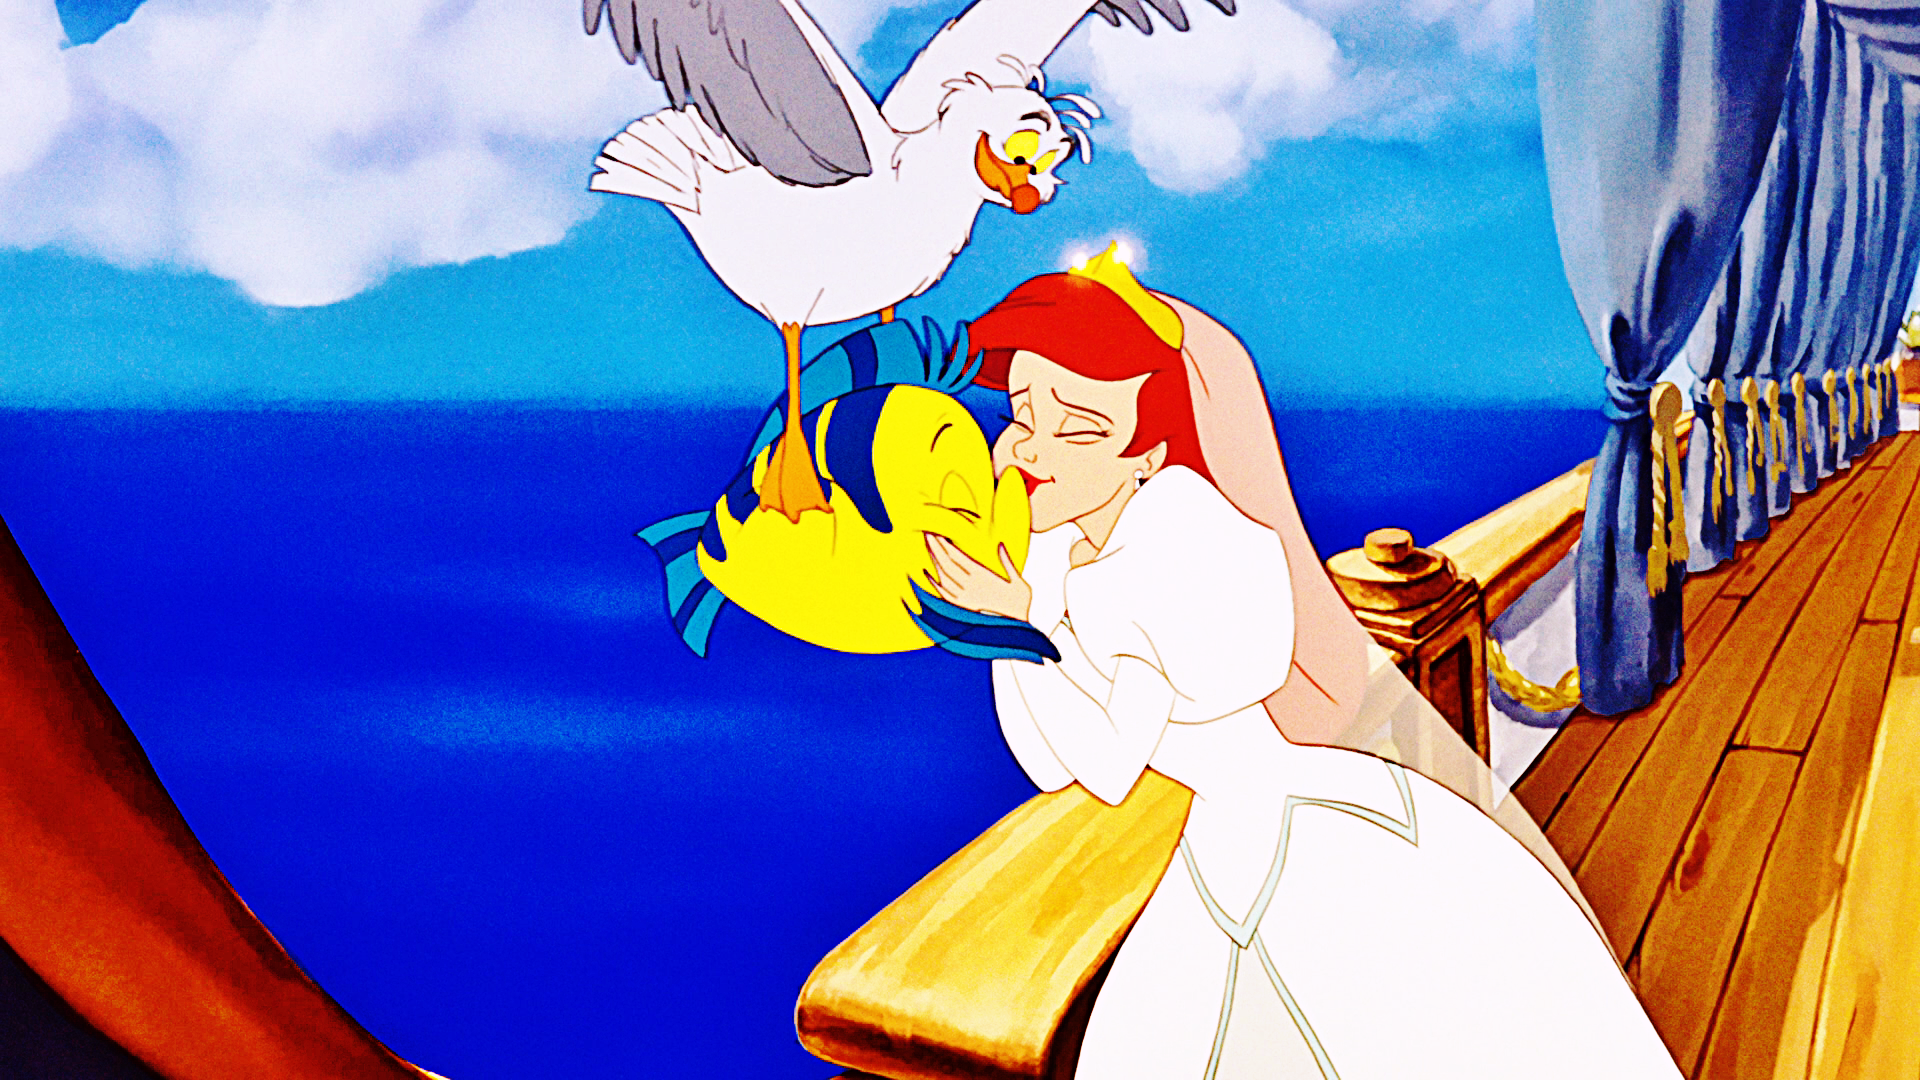 Walt-Disney-Screencaps-The-Little-Mermaid-walt-disney-characters-40126409-1920-1080.png